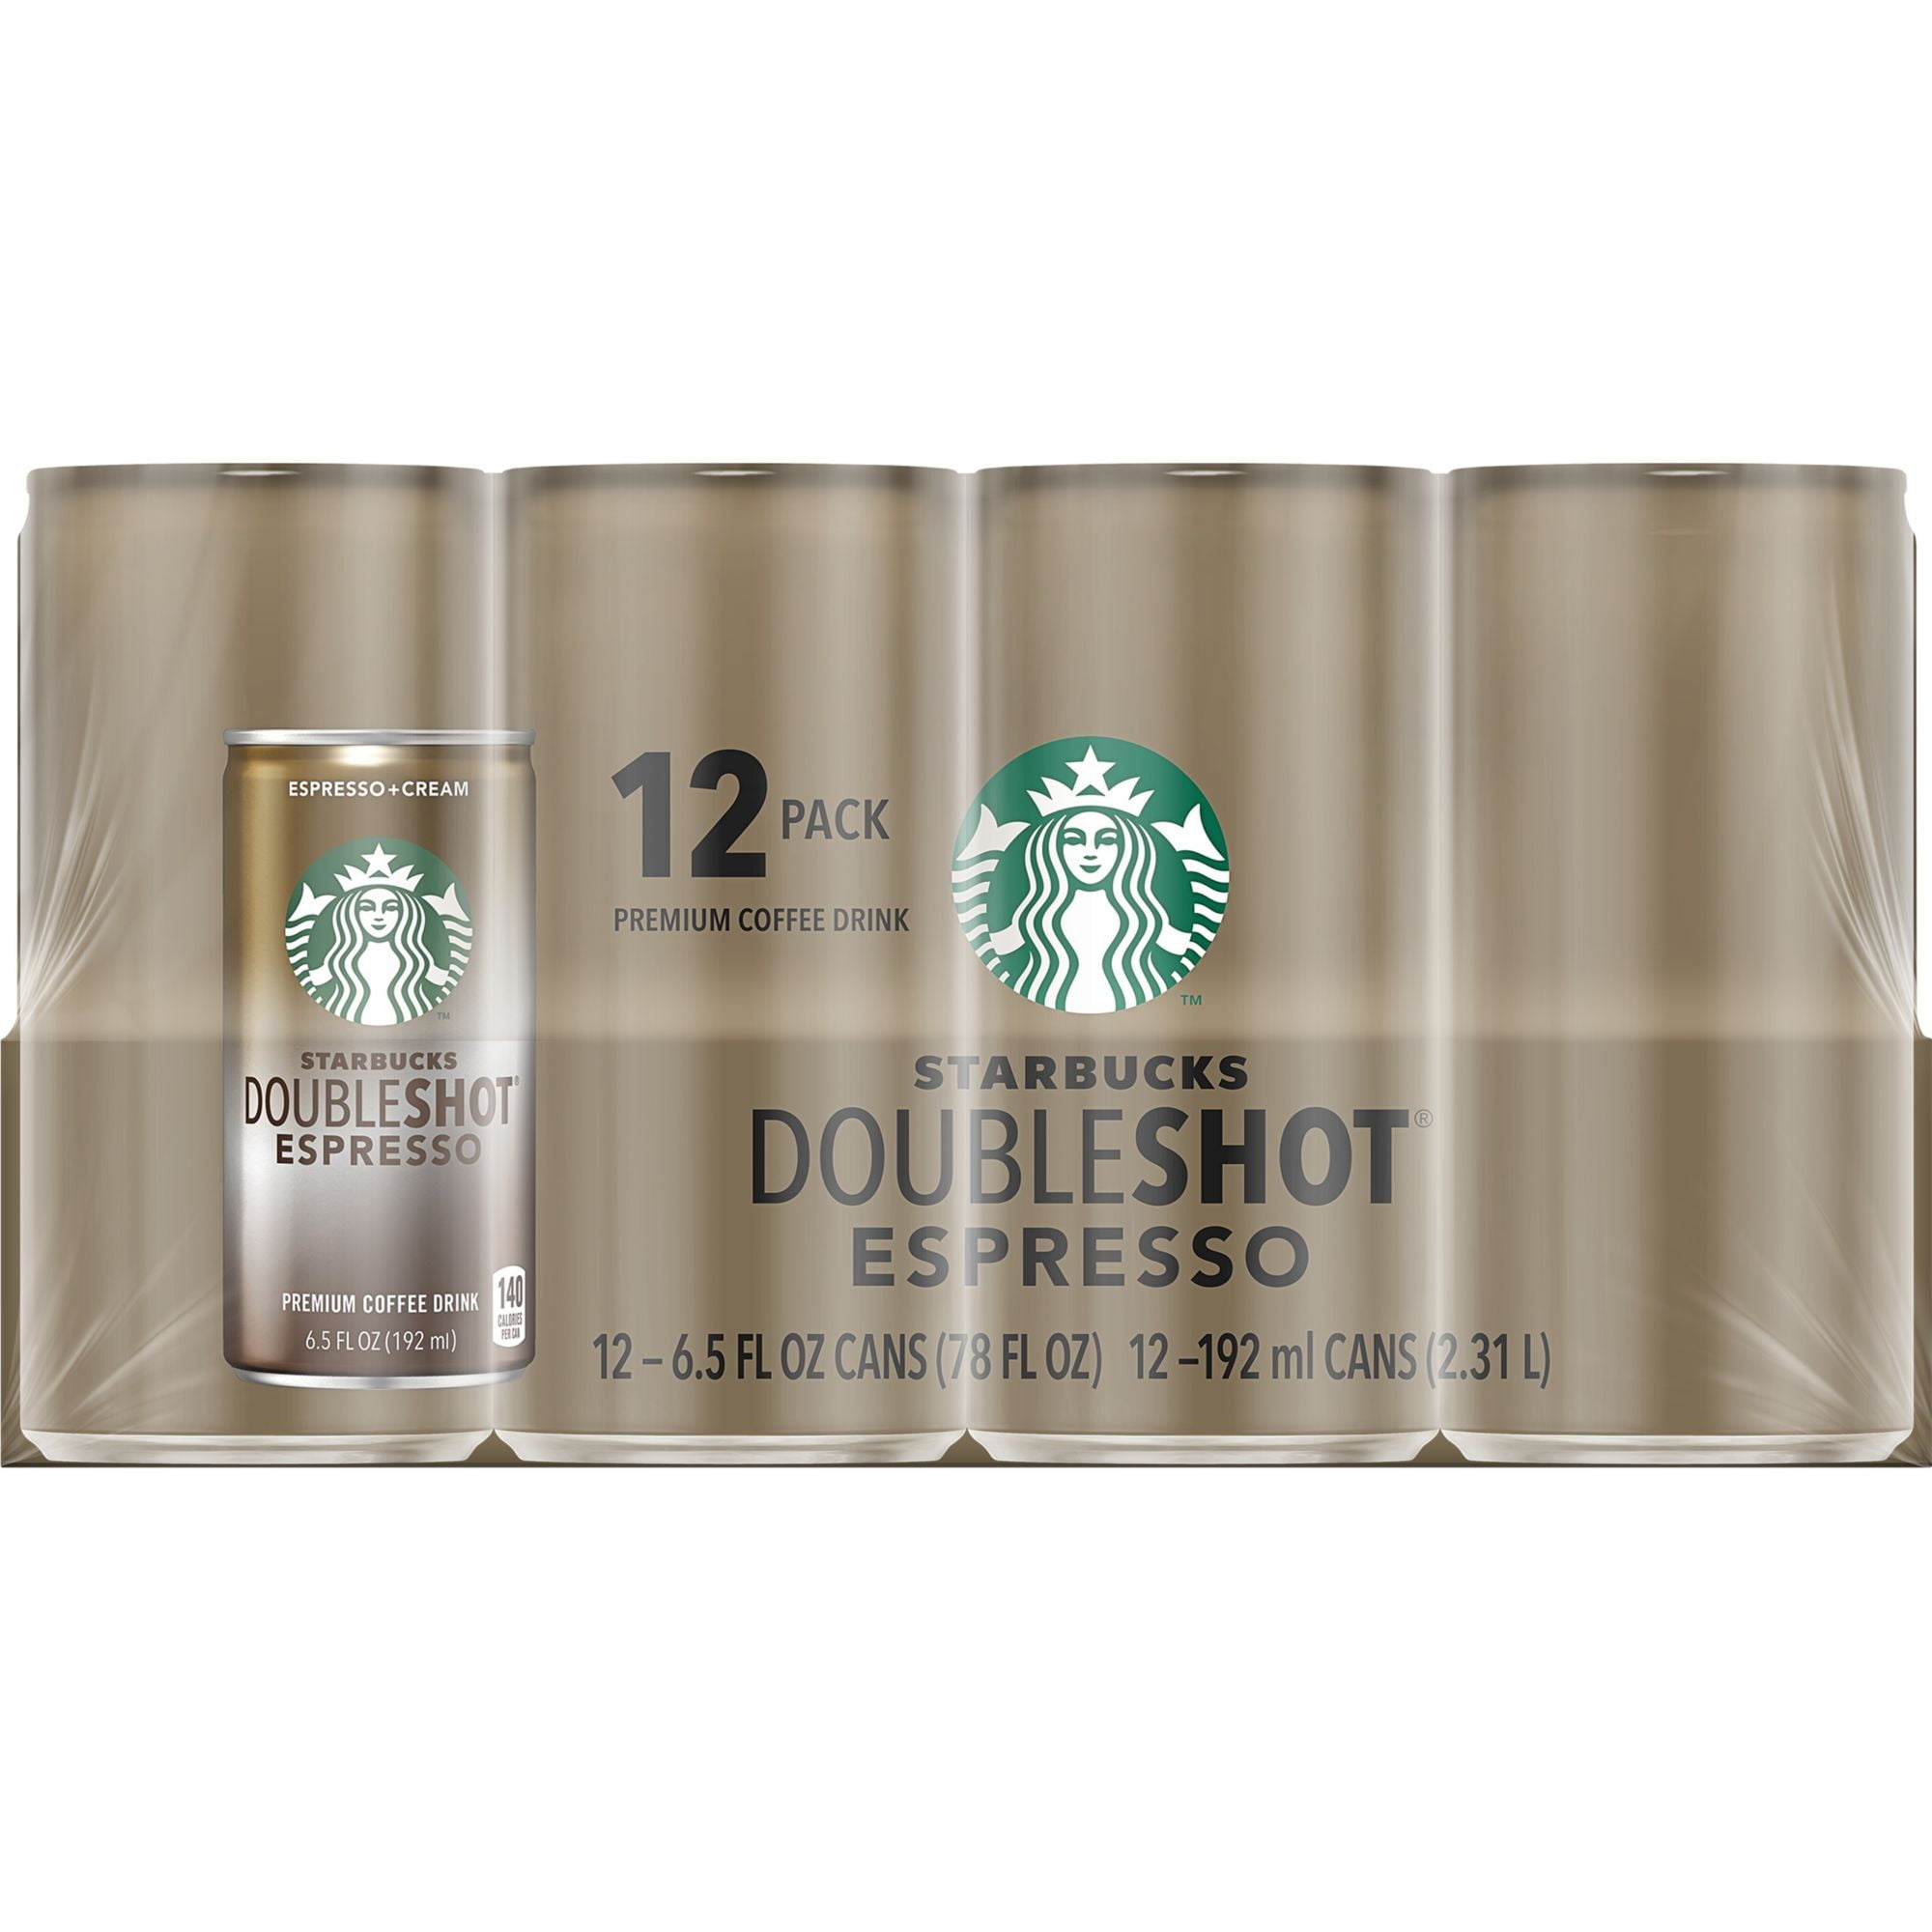 Product of Starbucks Doubleshot Espresso Coffee, 12 pk